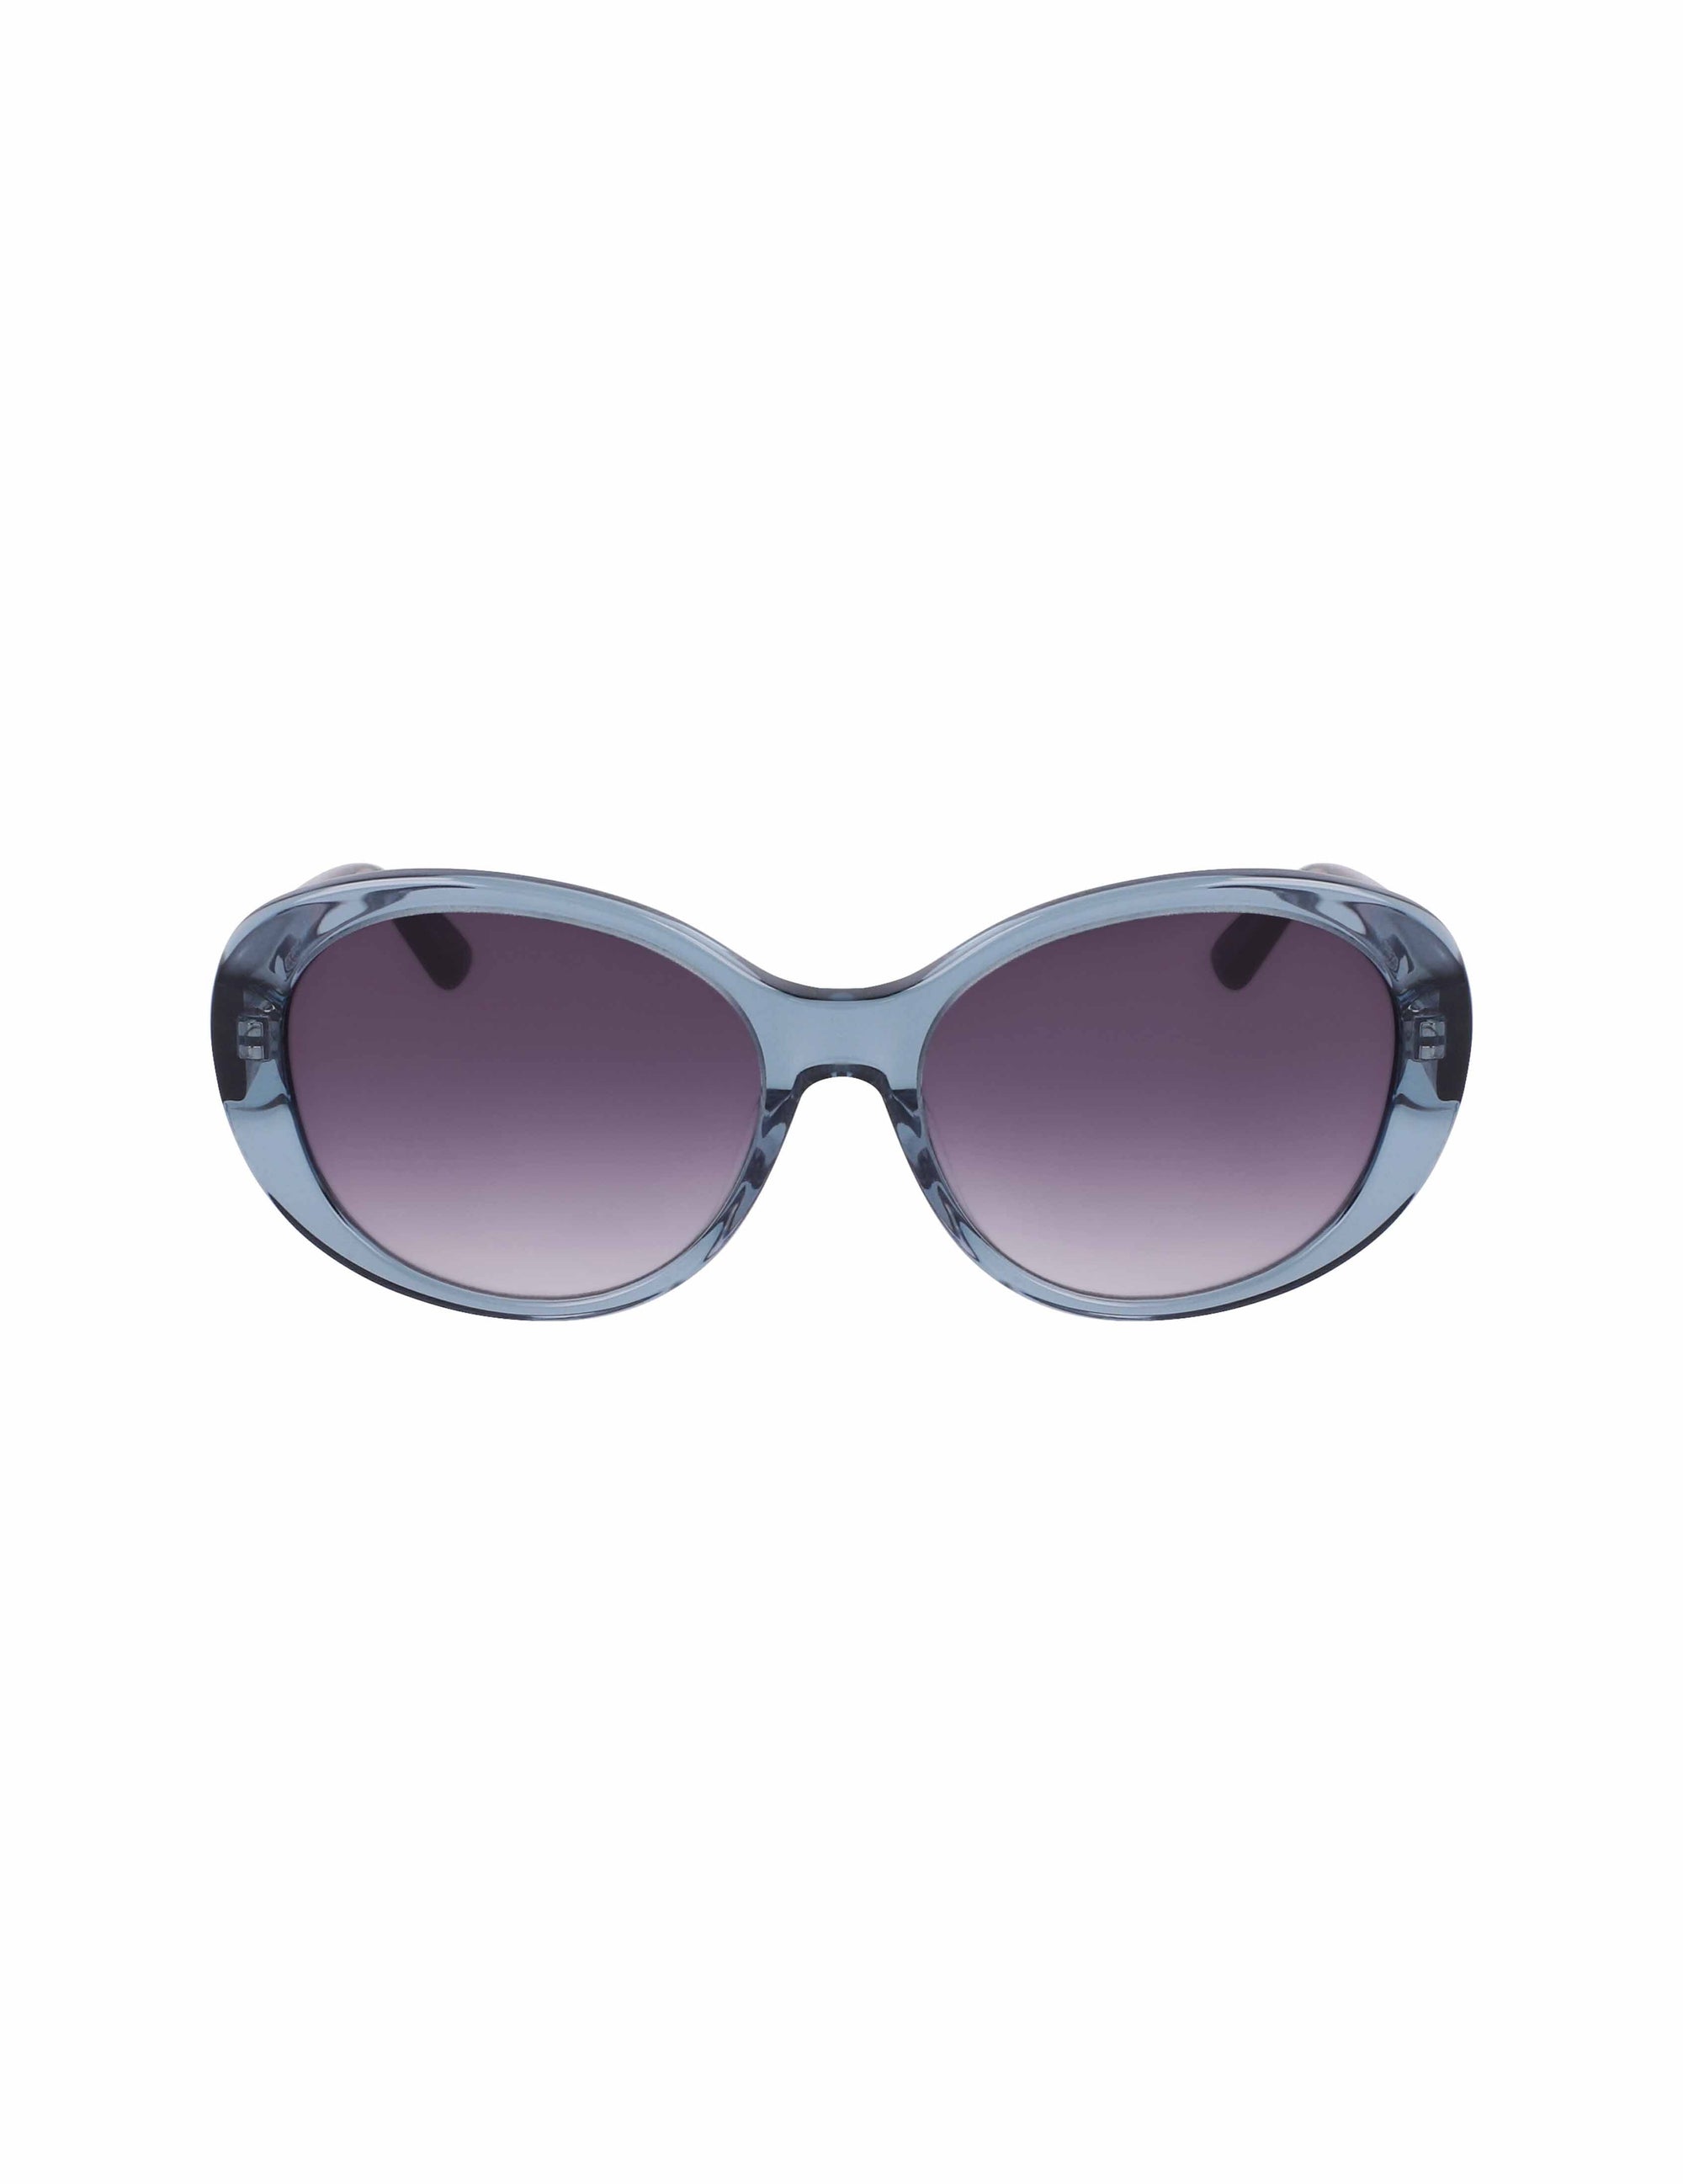 Sunglasses Anne Klein AK 7081 400 Blue Crystal